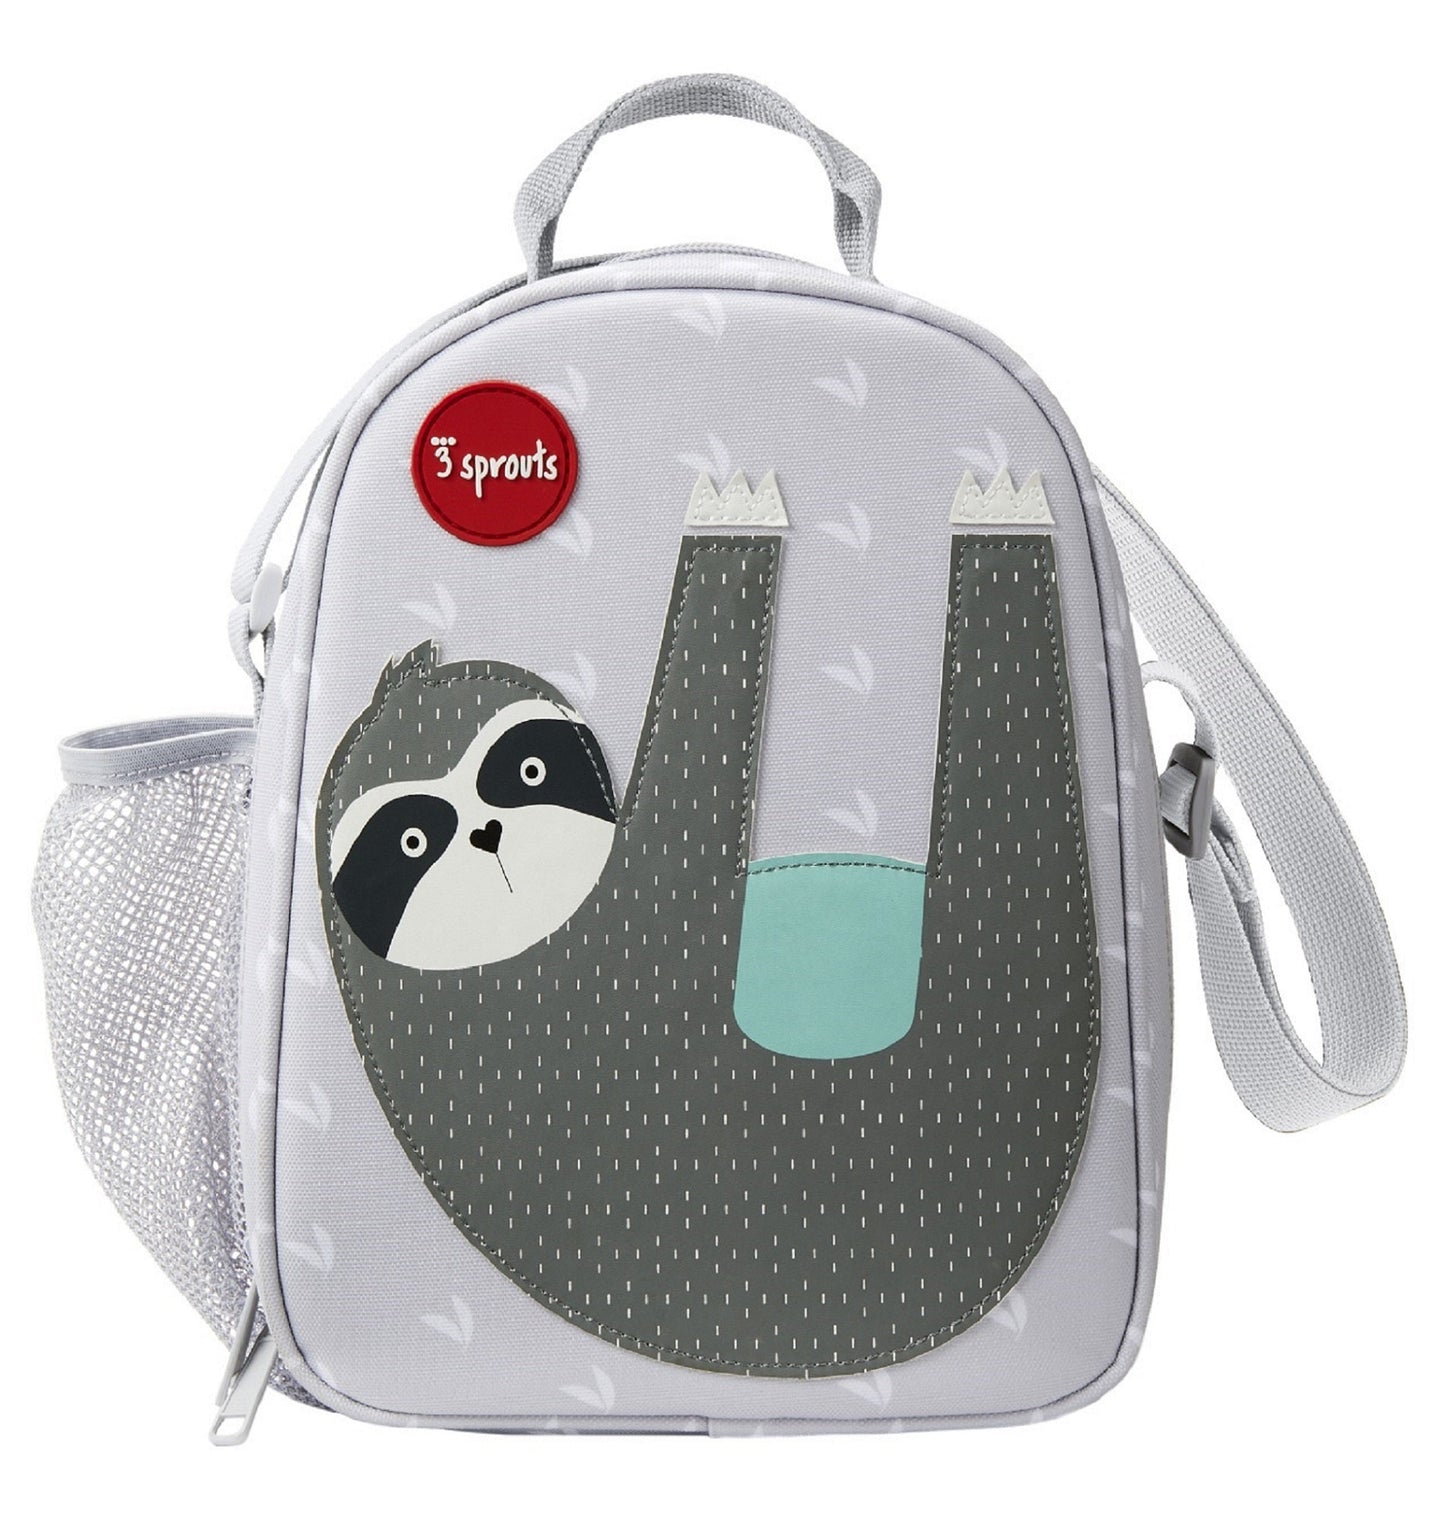 Sloth lunch bag